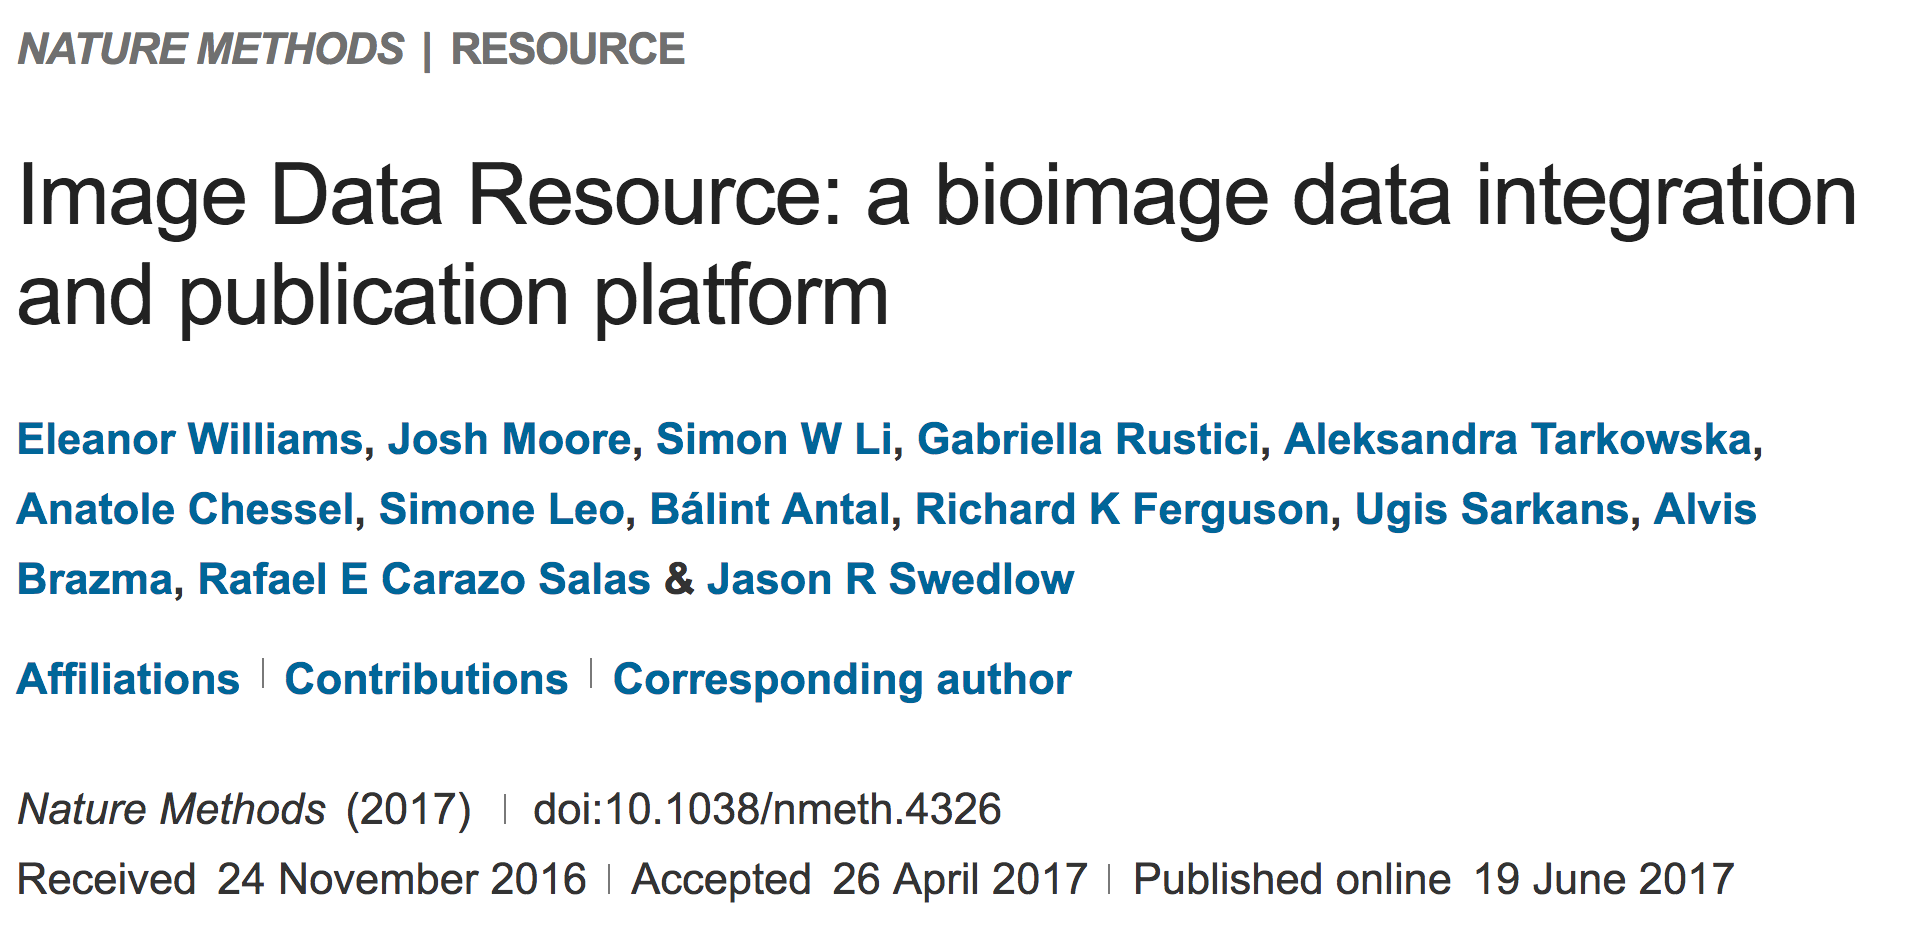 Image Data Resource: a bioimage data integration and publication platform